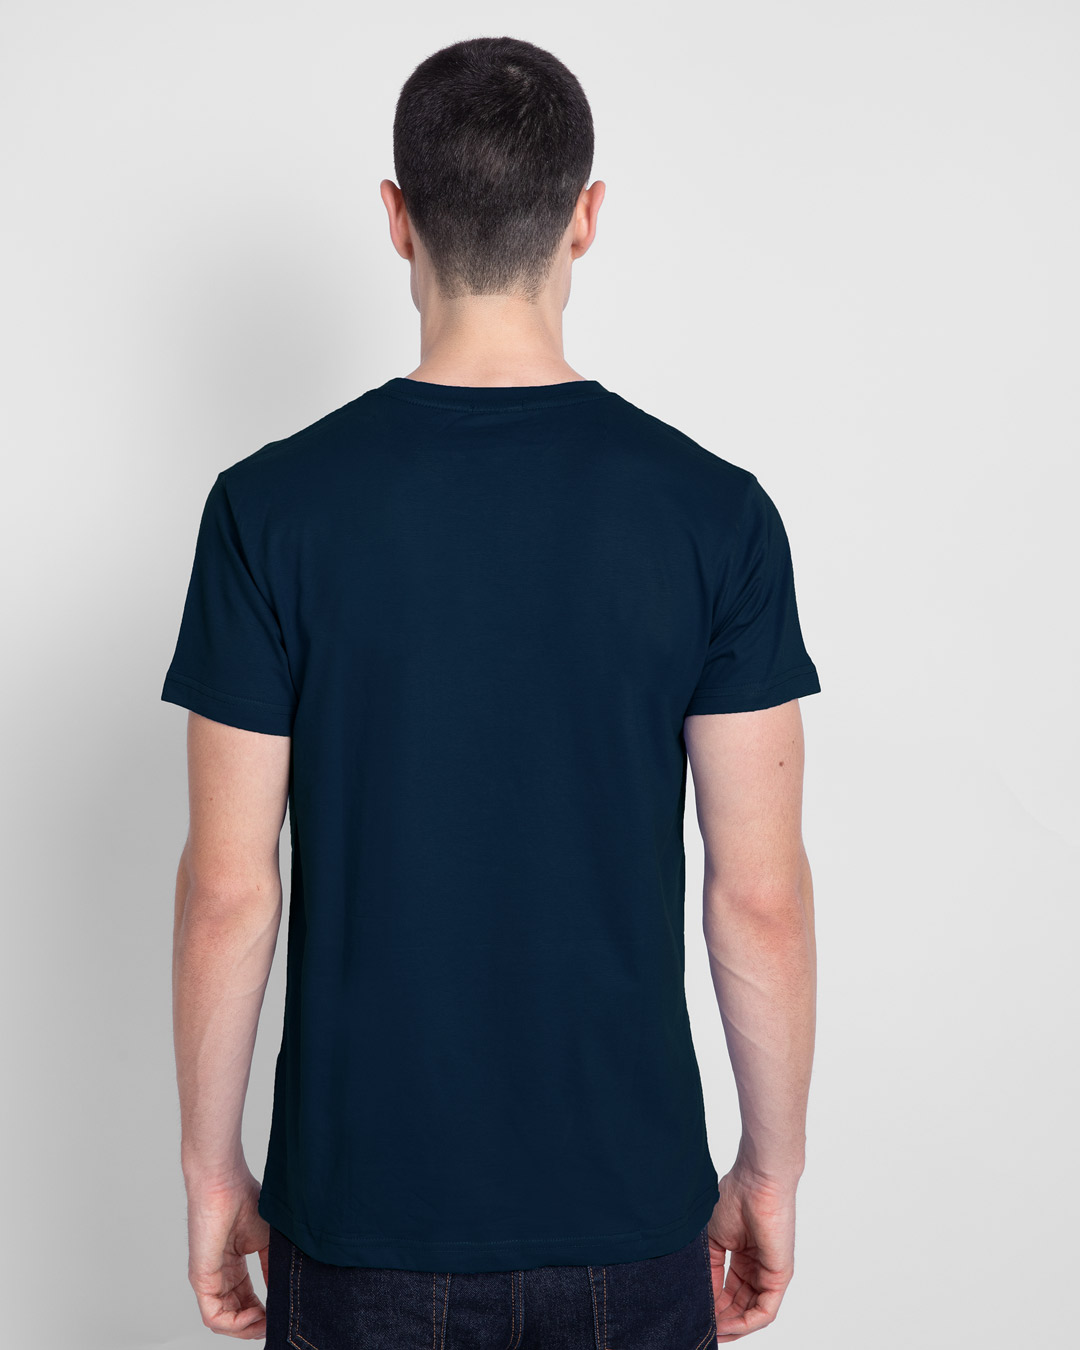 Shop Not Giving Up Half Sleeve T-Shirt Navy Blue-Back